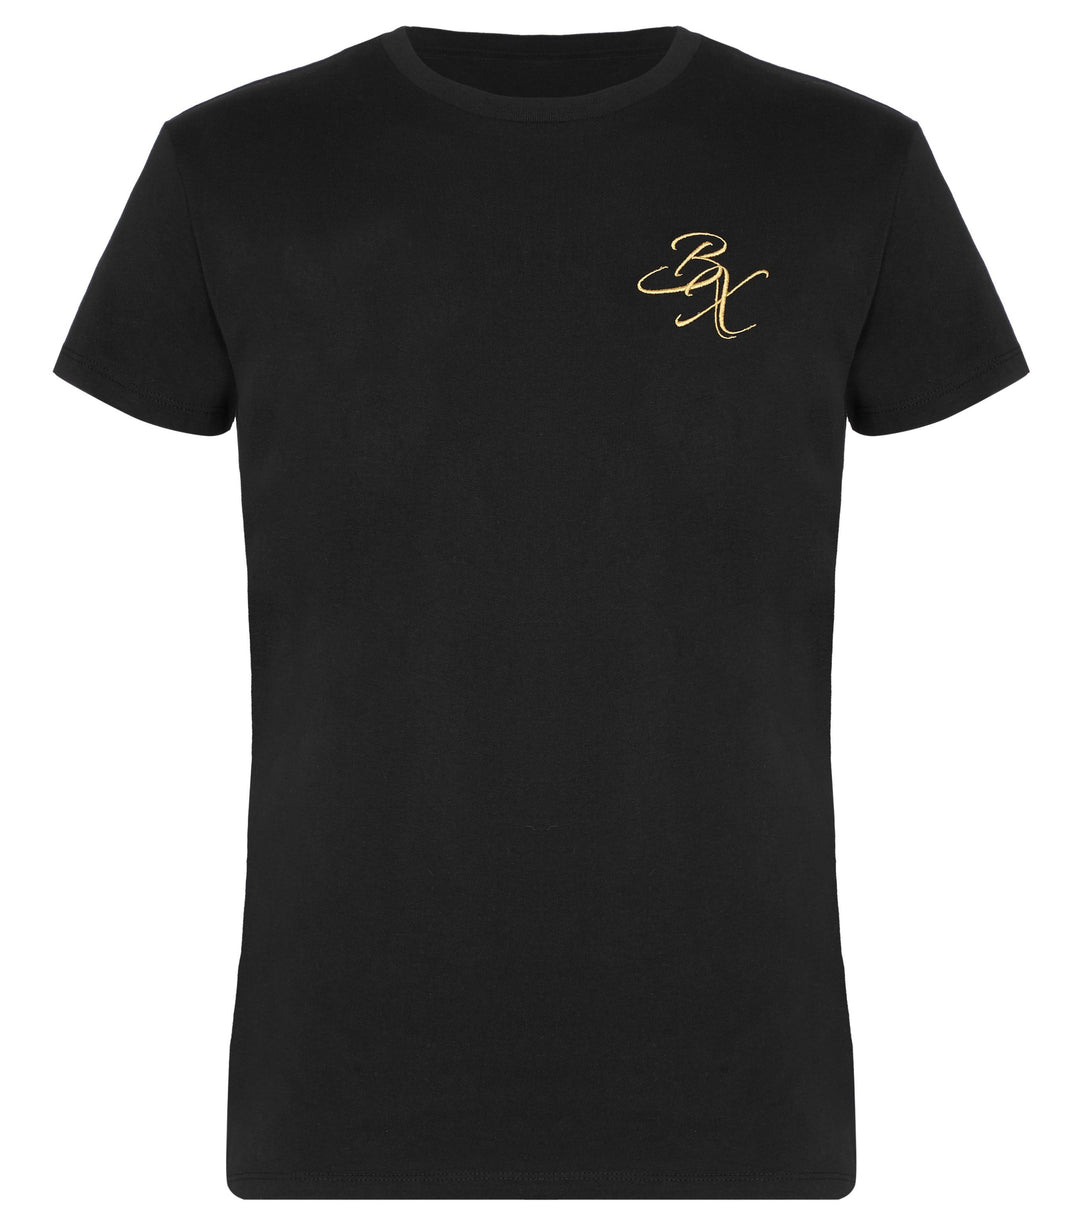 BX Edition Black/Gold T-shirt - Adapt Avenue